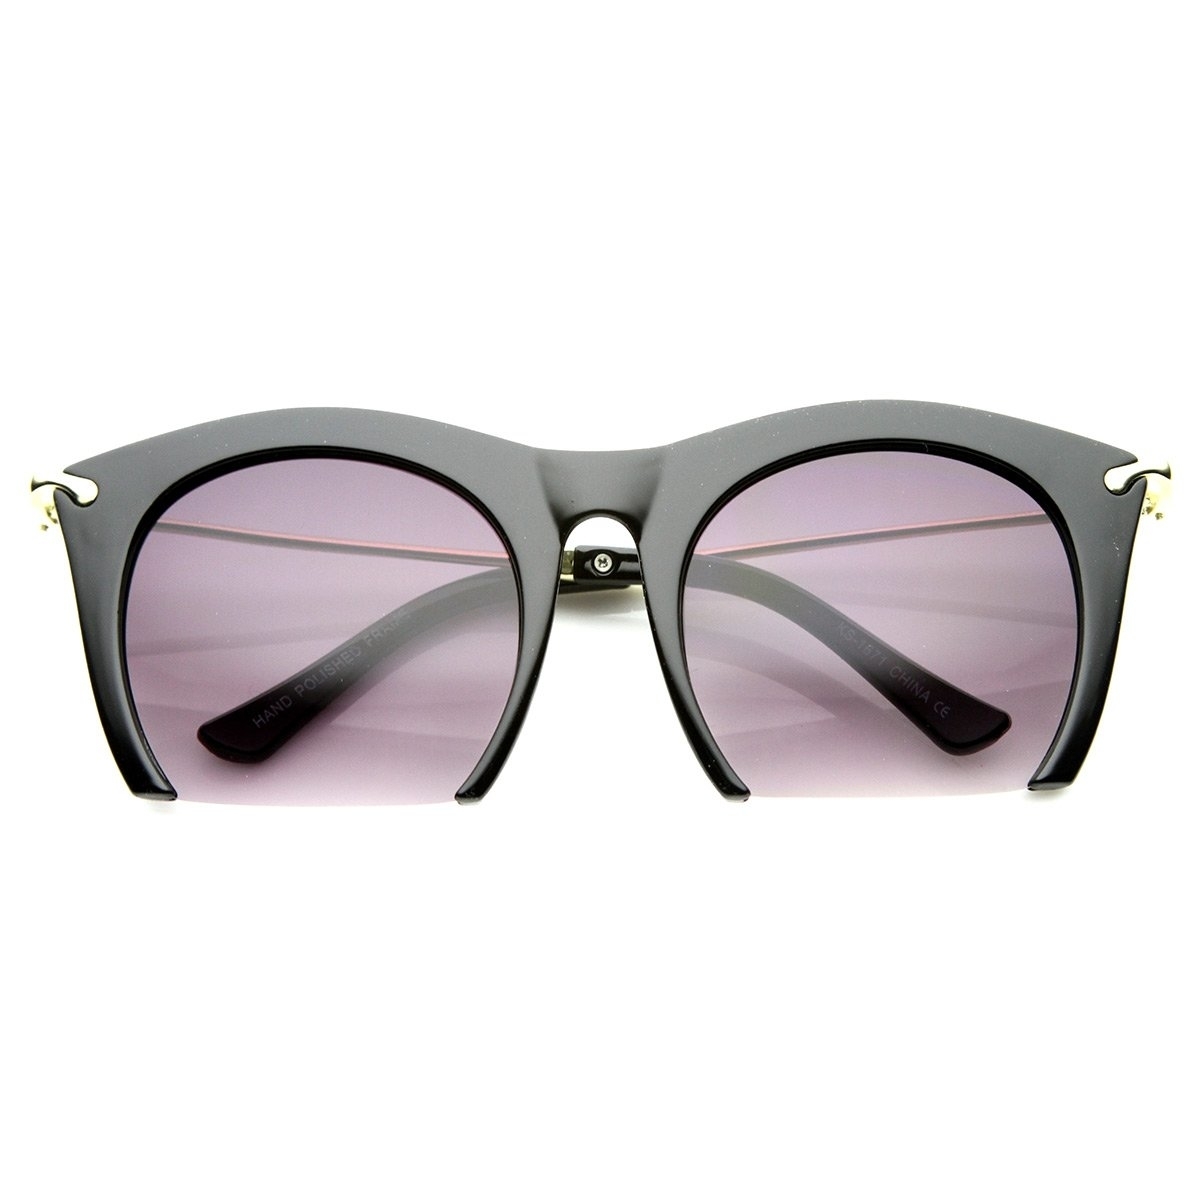 Womens Cateye High Fashion Semi-Rimless Metal Arms Sunglasses - Black Lavender